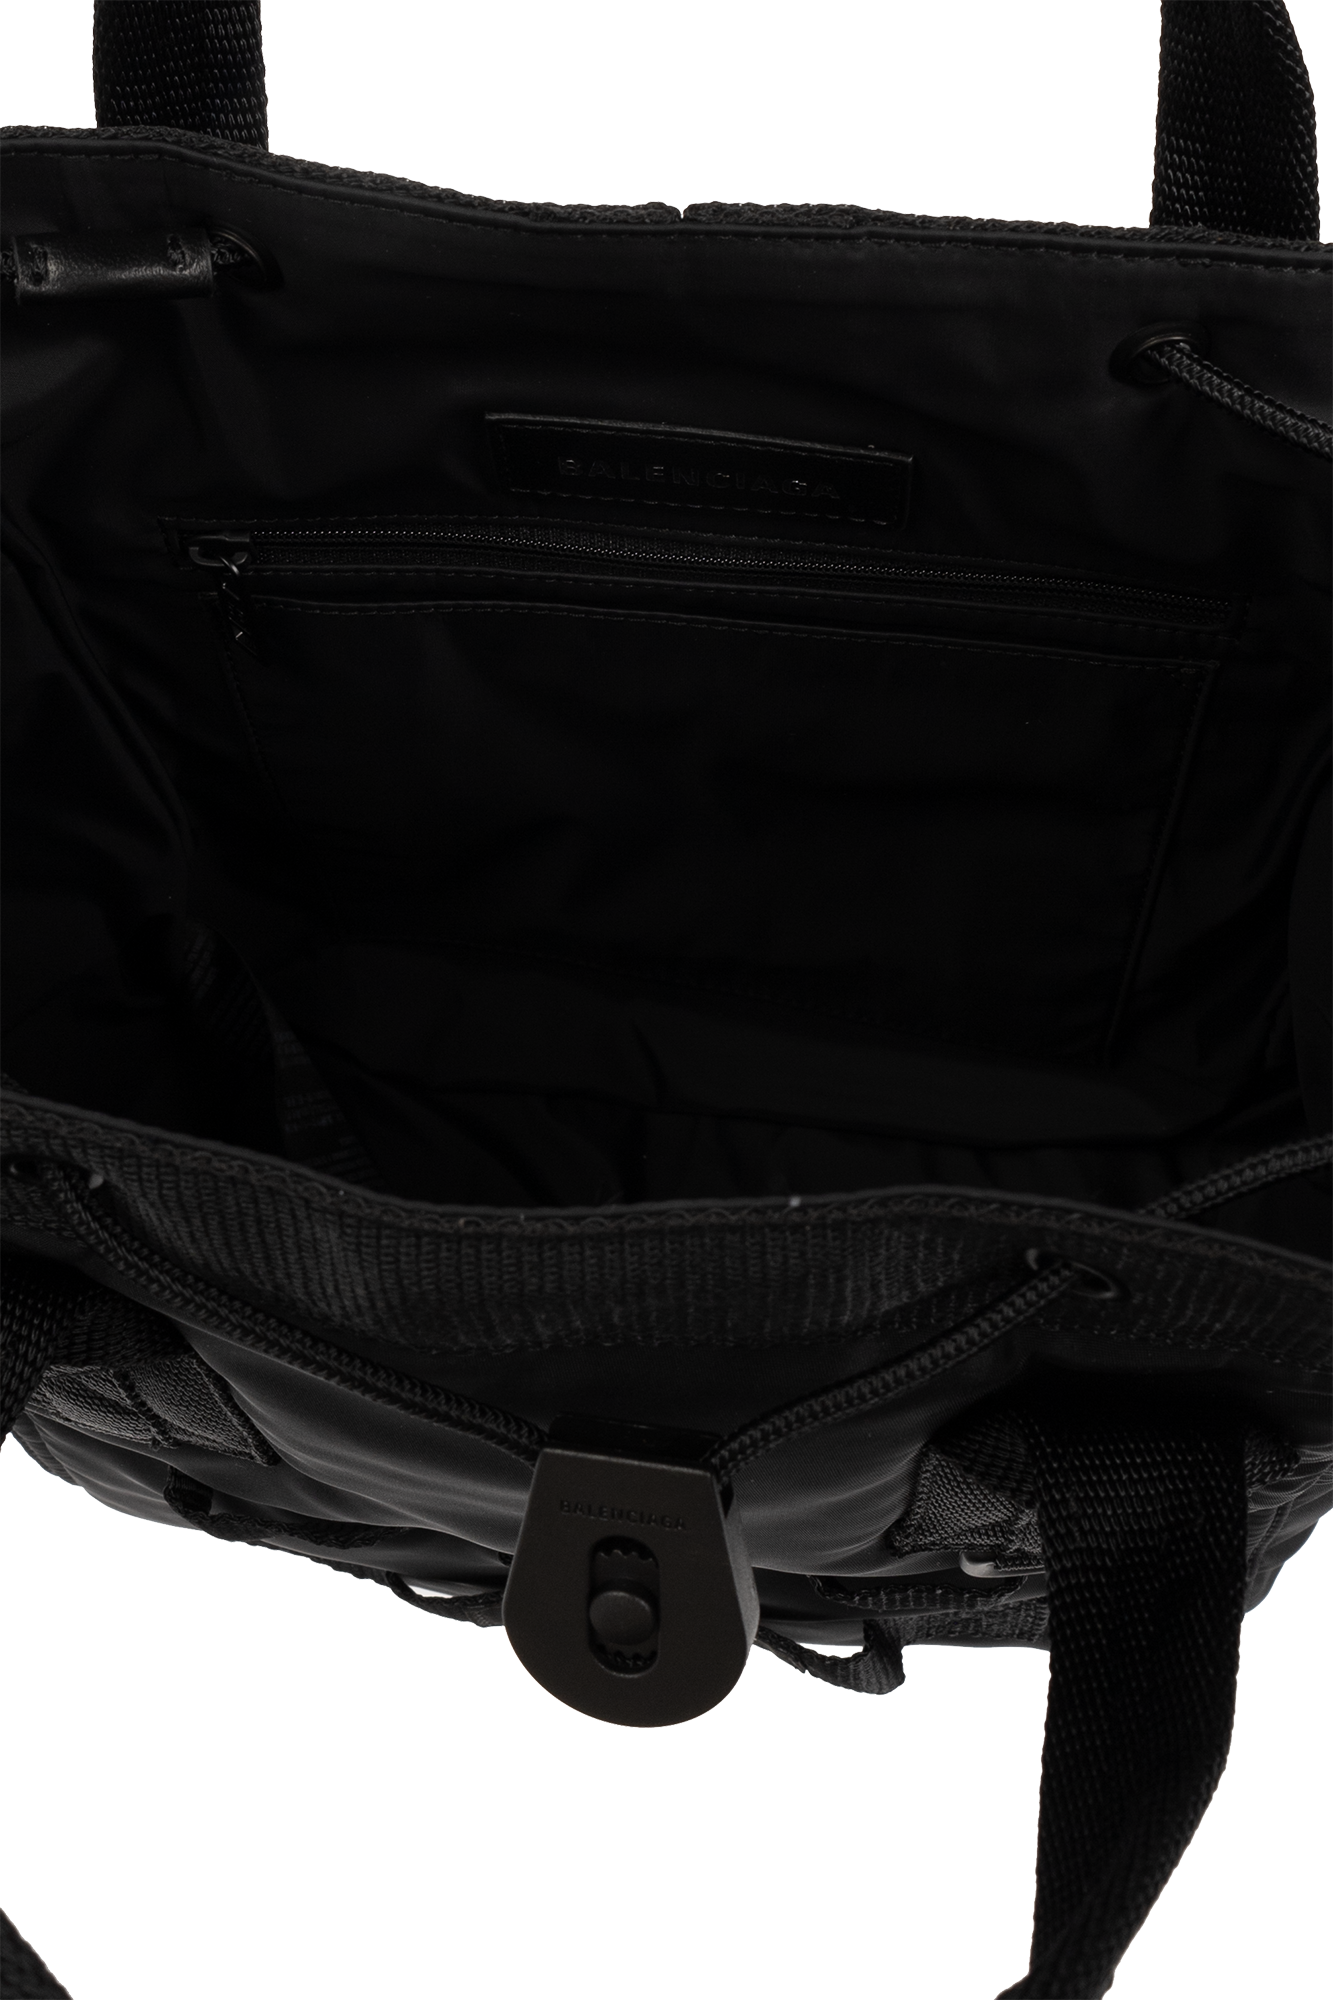 Balenciaga ‘Army Small’ shoulder bag